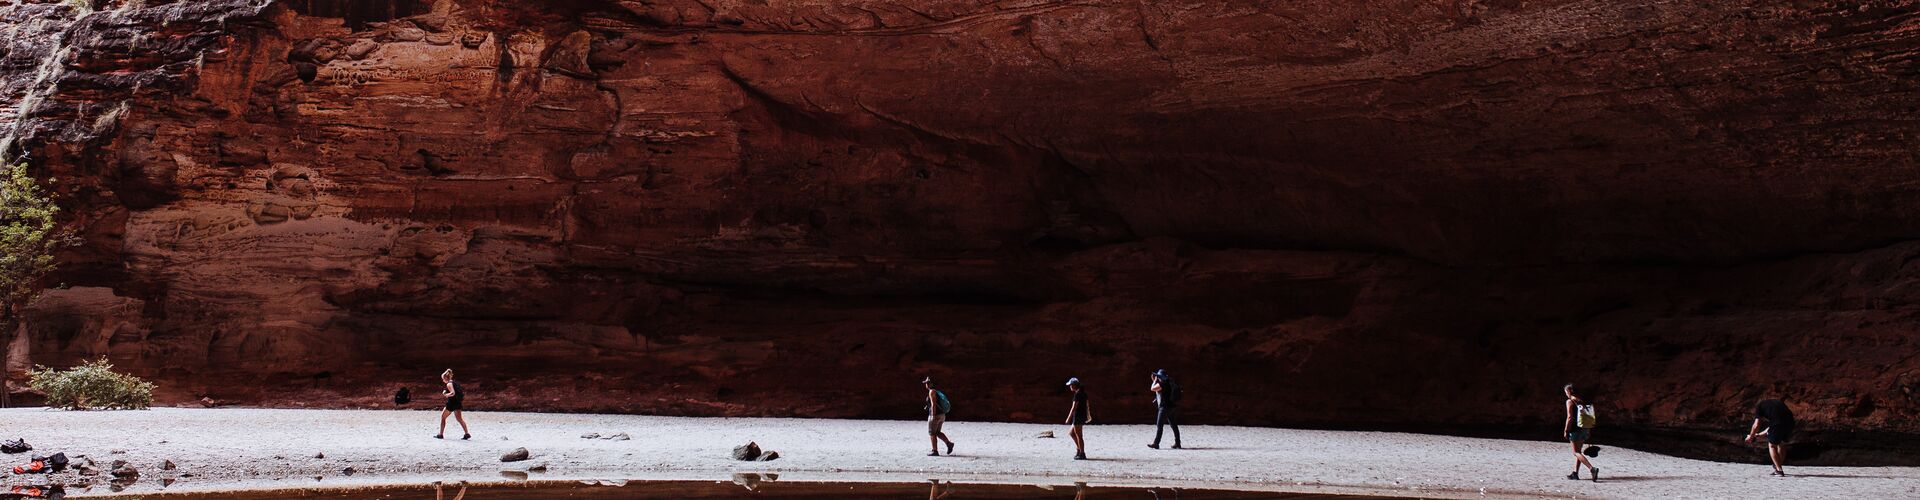 A group of people trekking through the Kimberley region in Western Australia